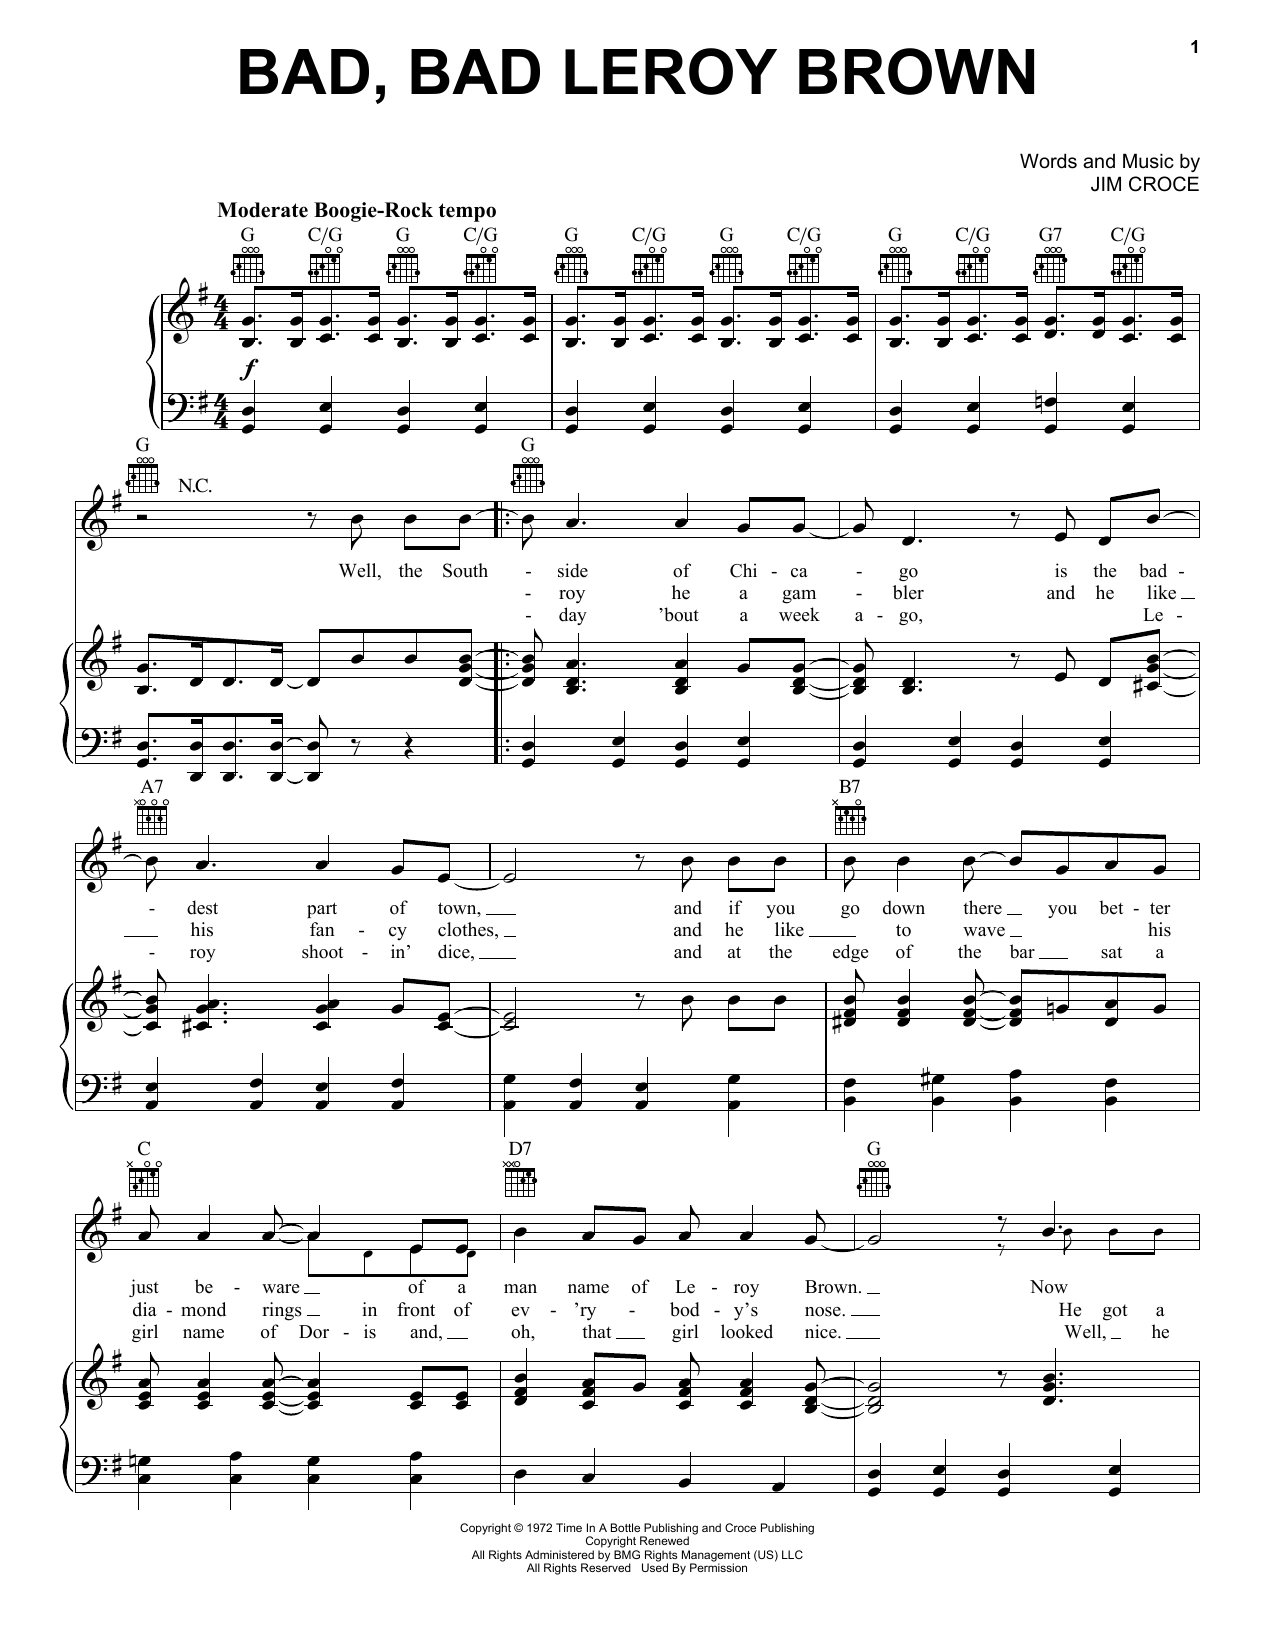 Jim Croce Bad, Bad Leroy Brown Sheet Music Notes & Chords for Alto Saxophone - Download or Print PDF